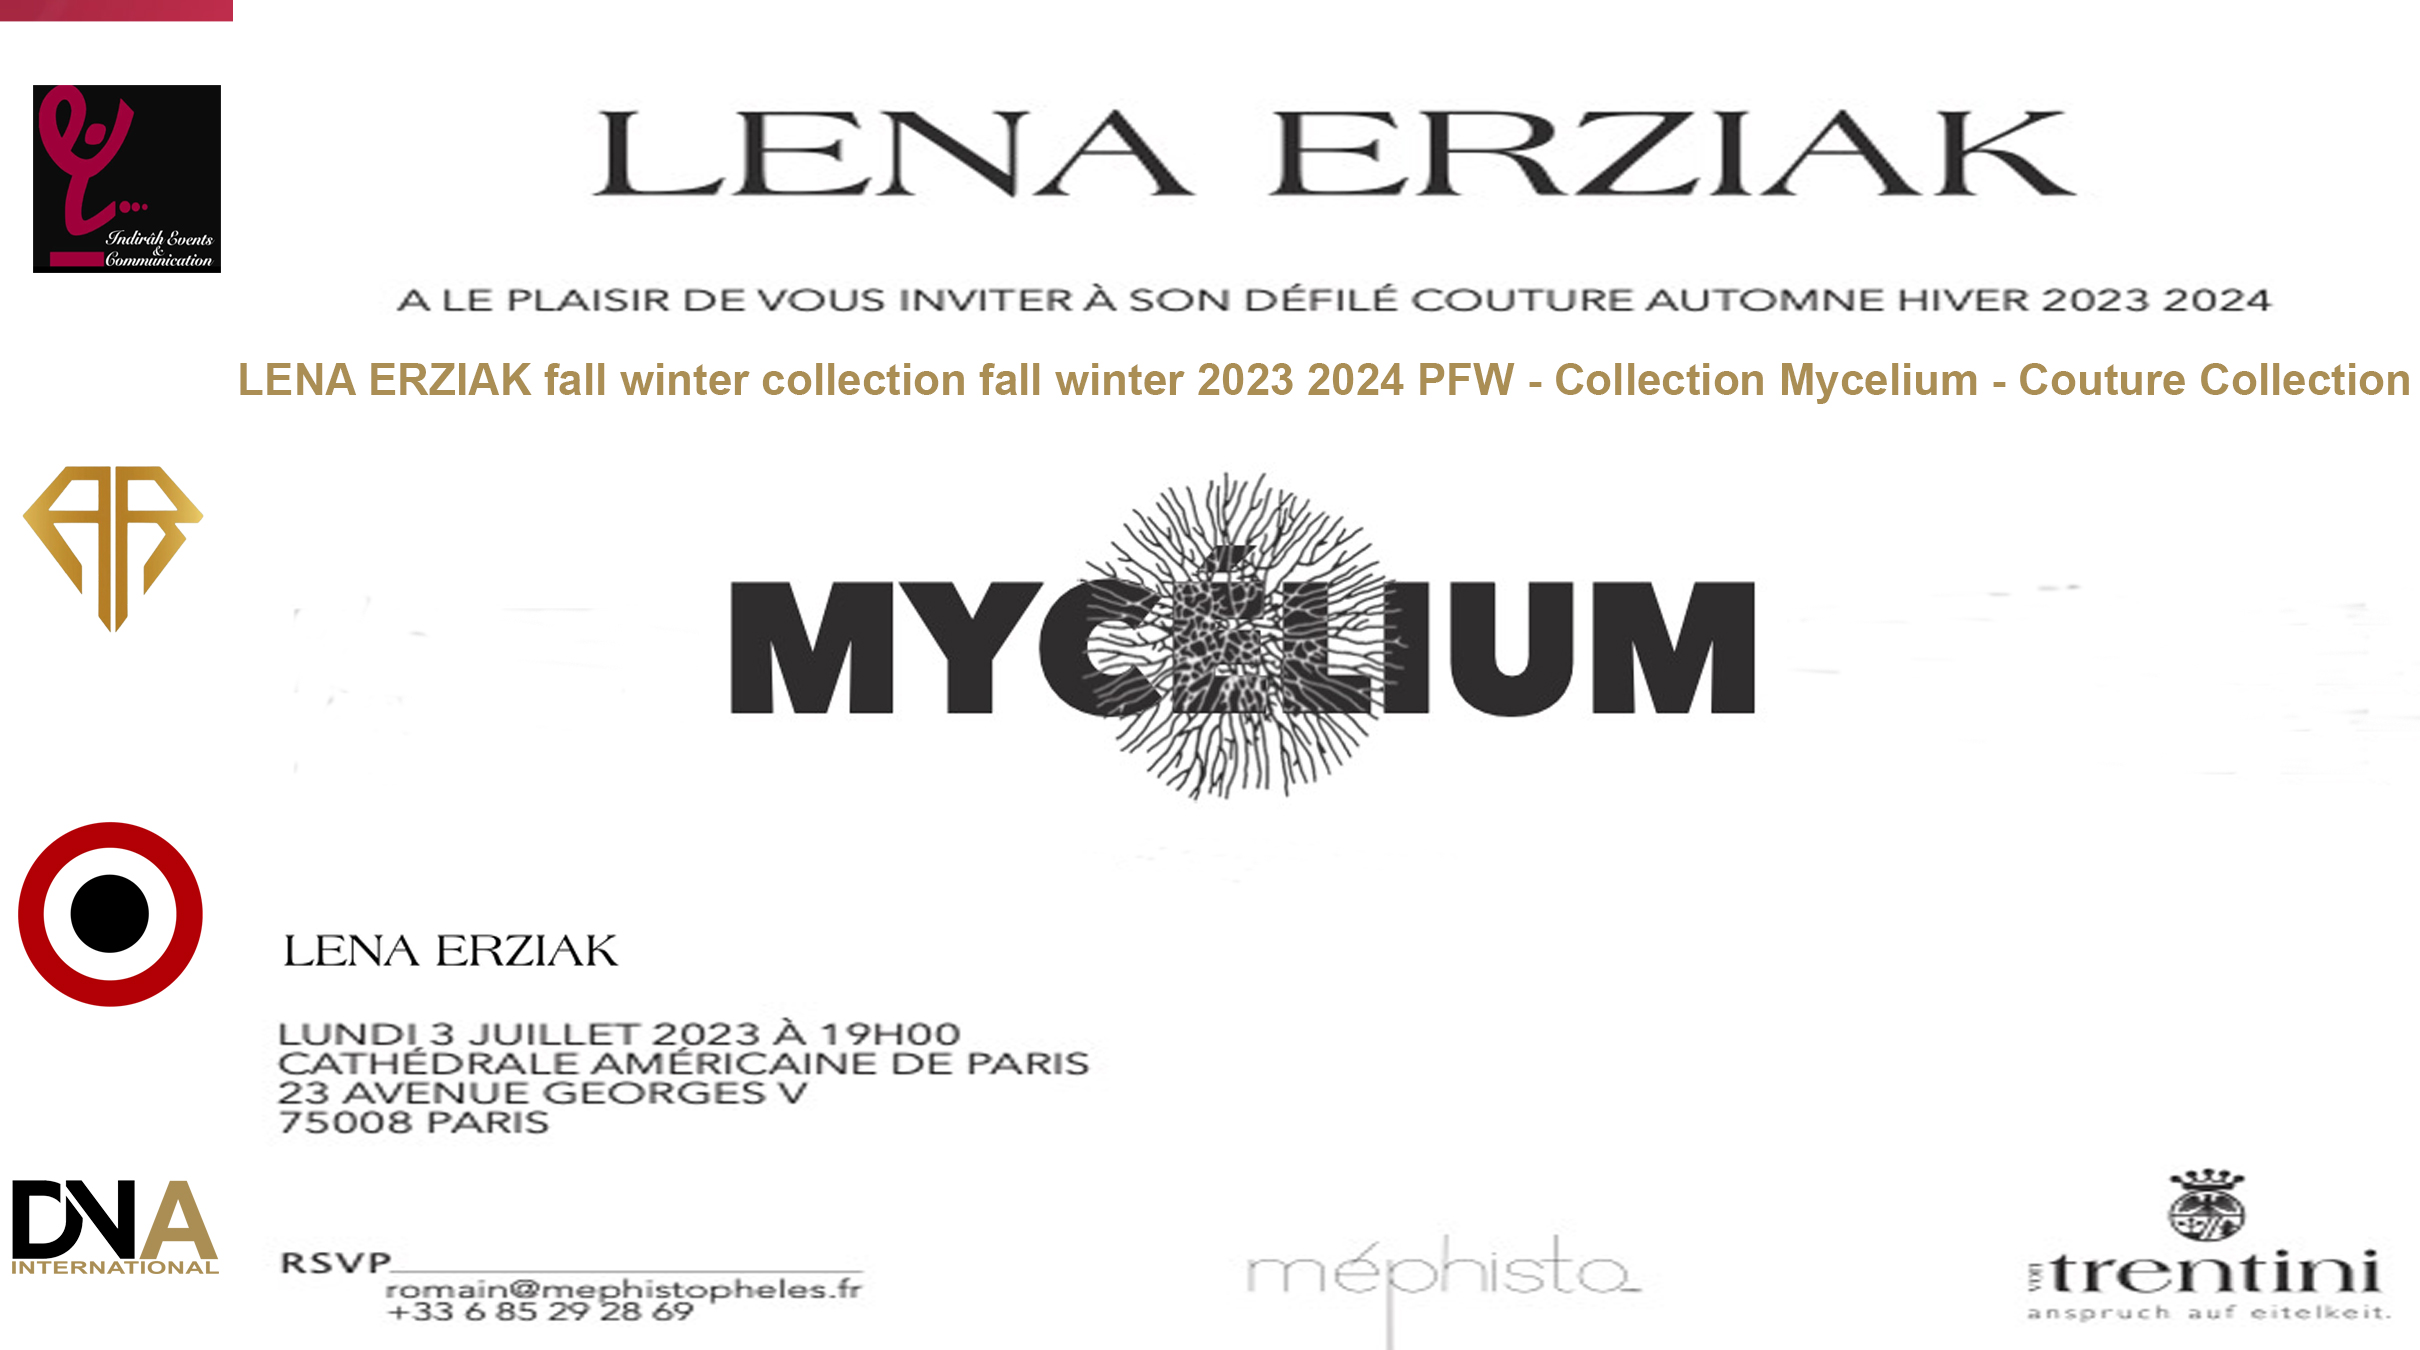 AFRICA-VOGUE-COVER-LENA-ERZIAK-fall-winter-collection-fall-winter-2023-2024-PFW-Collection-Mycelium-Couture-Collection-DN-AFRICA-MEDIA-PARTNER